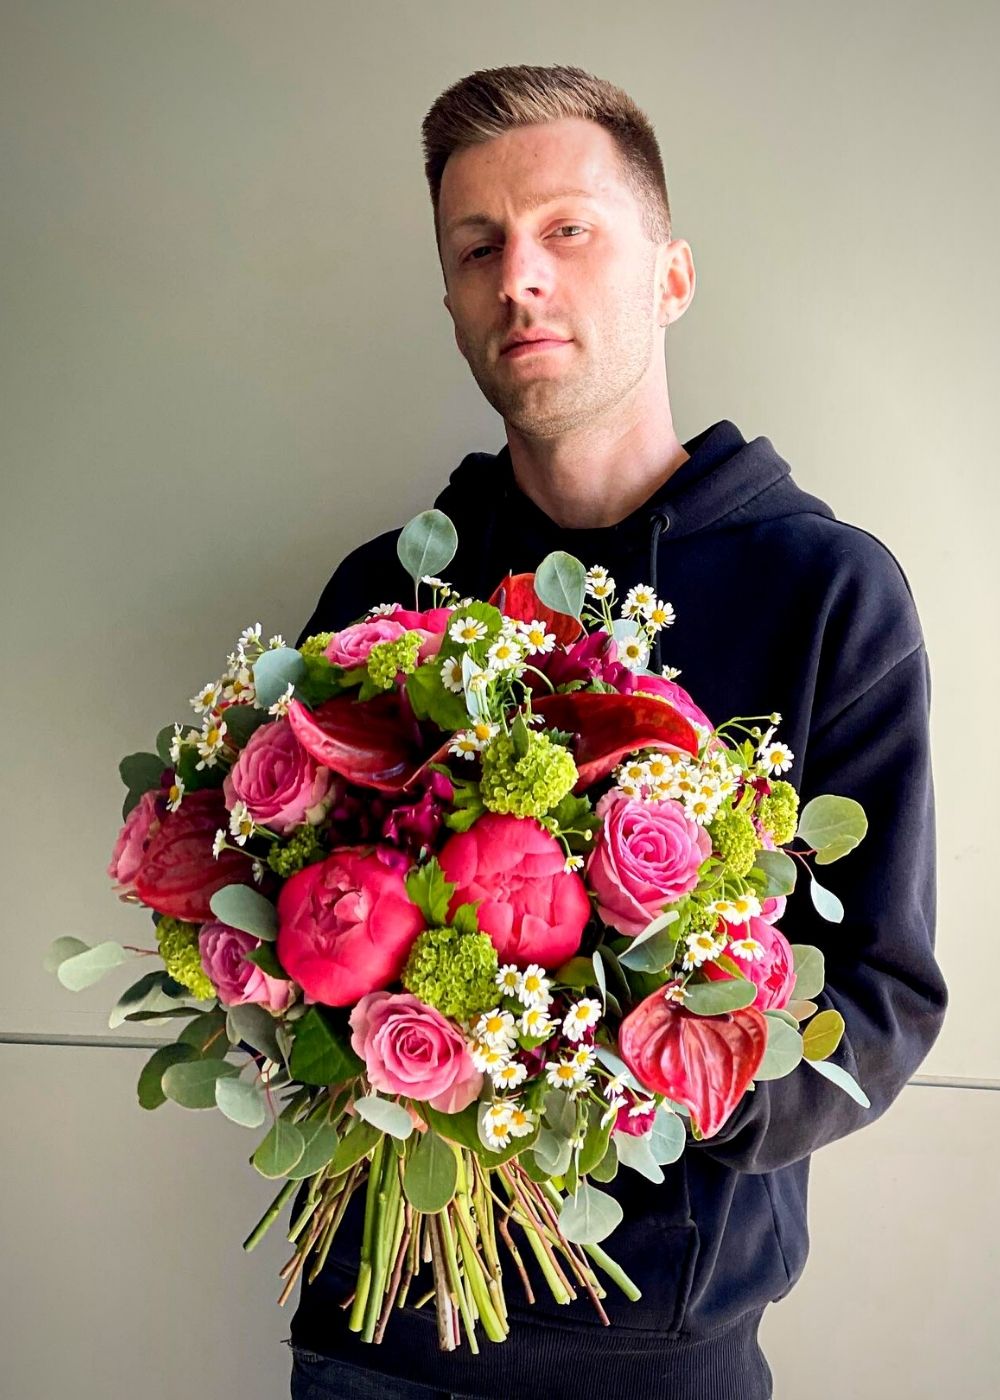 Floral designer Mateusz Wasak